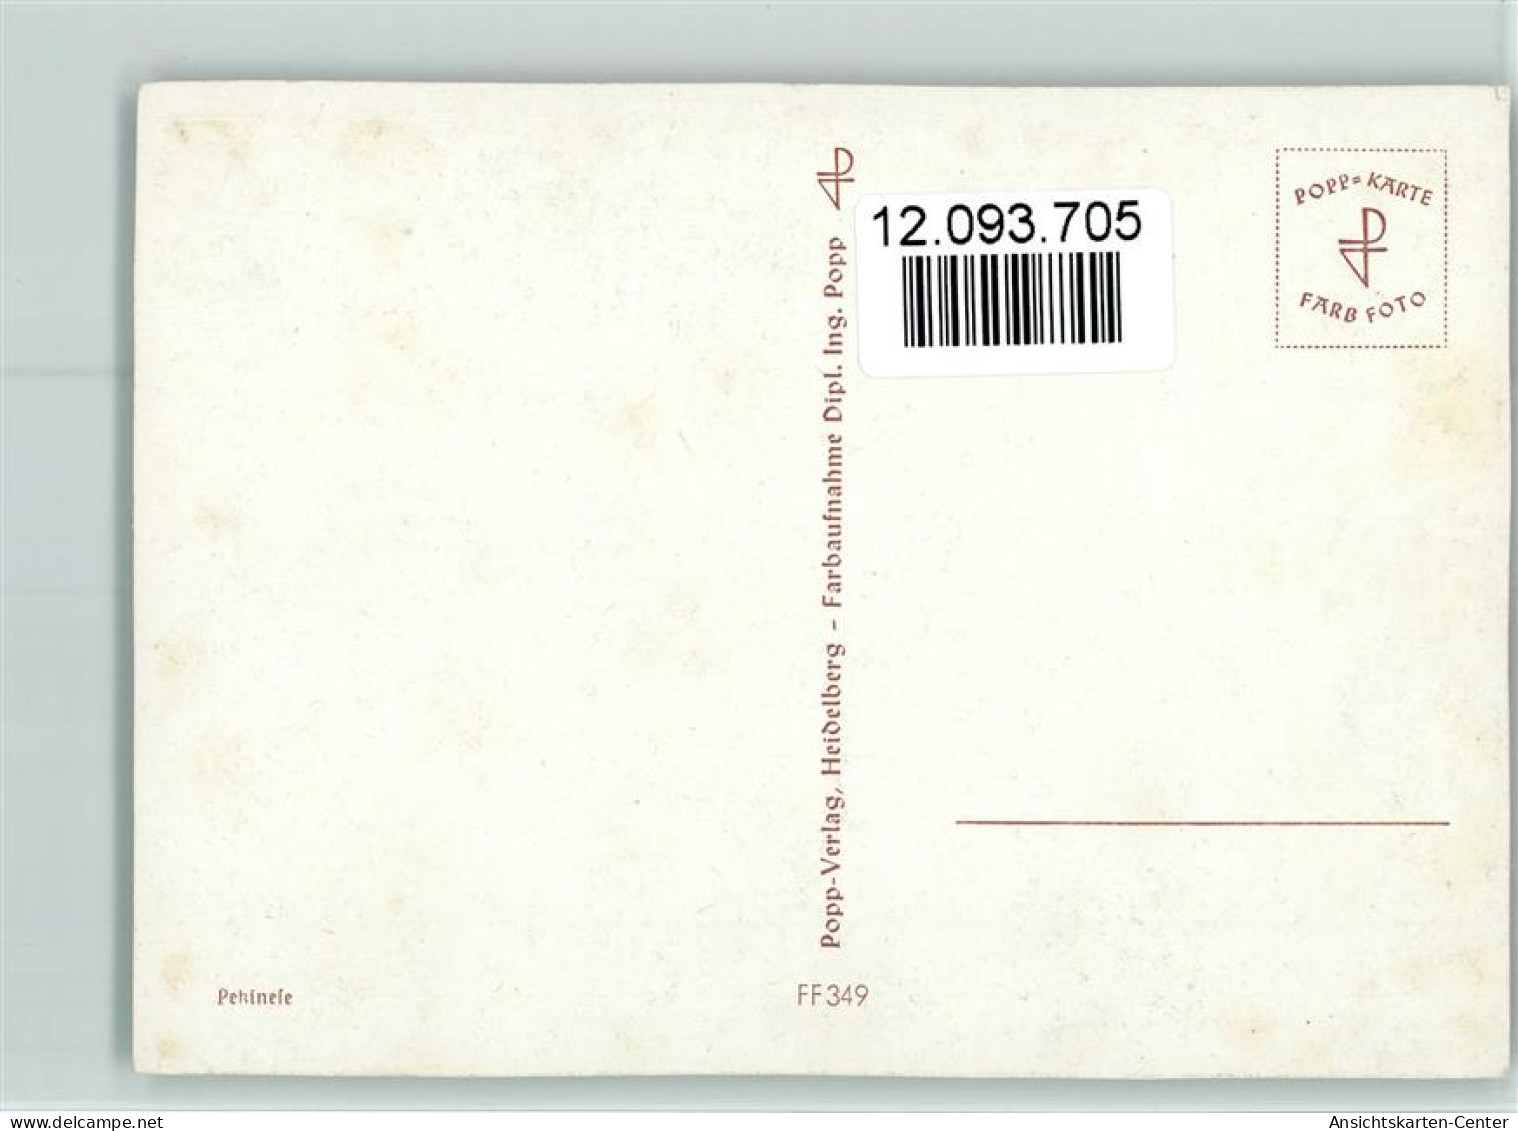 12093705 - Pekinese Popp Karte Nr. FF349 AK - Dogs